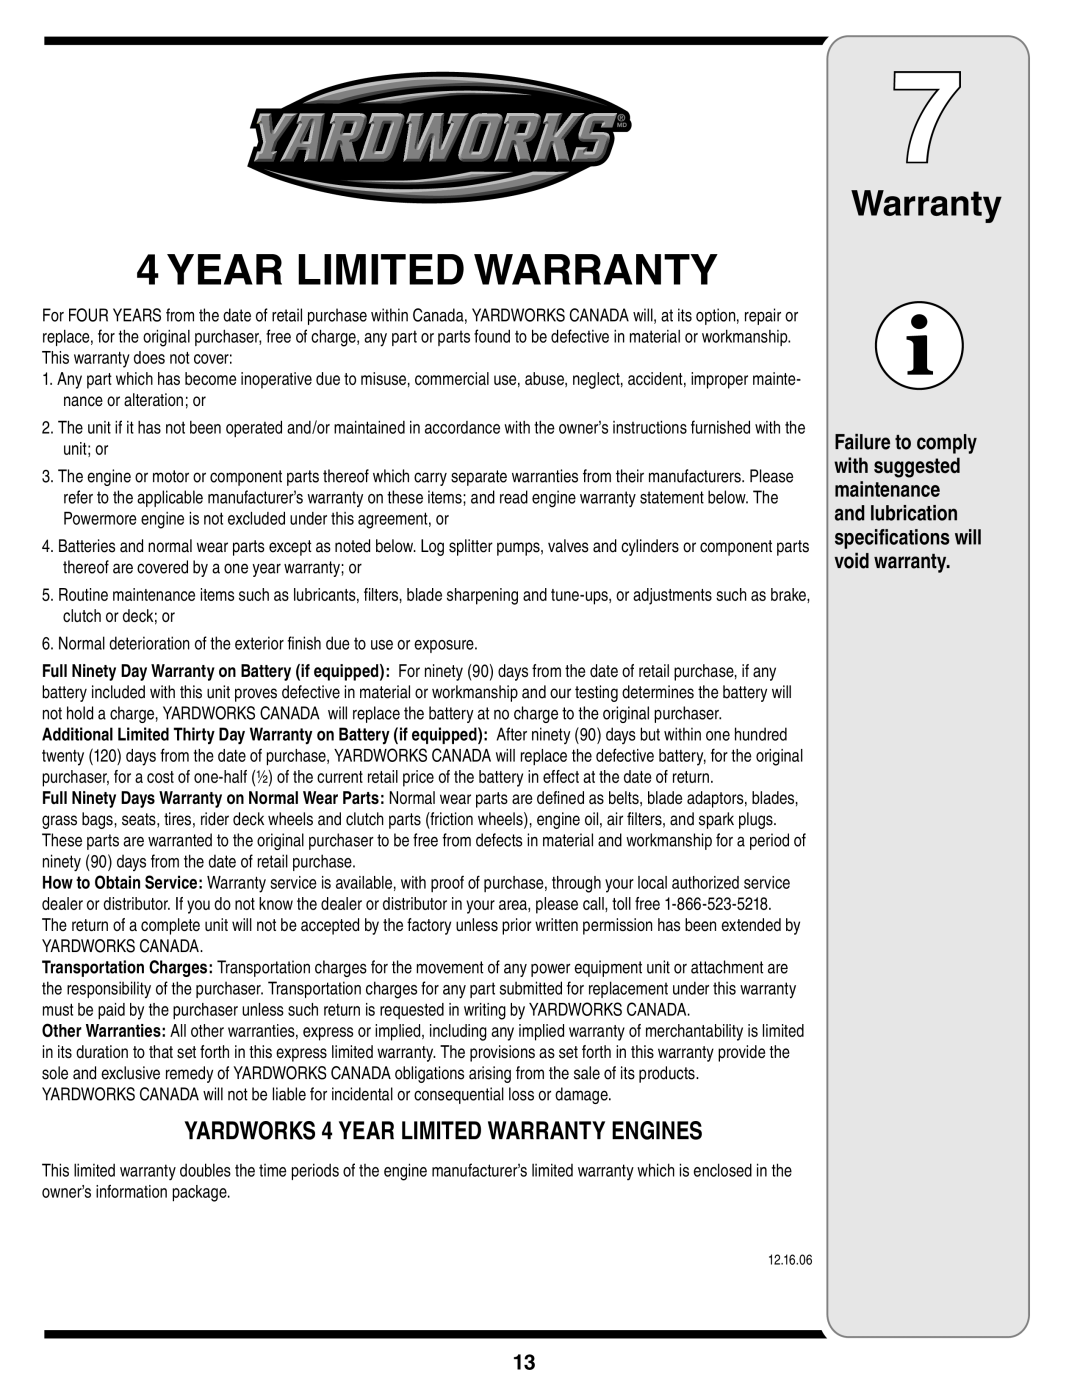 MTD 60-1620-4 owner manual Year Limited Warranty, YARDWORKS 4 YEAR LIMITED WARRANTY ENGINES 